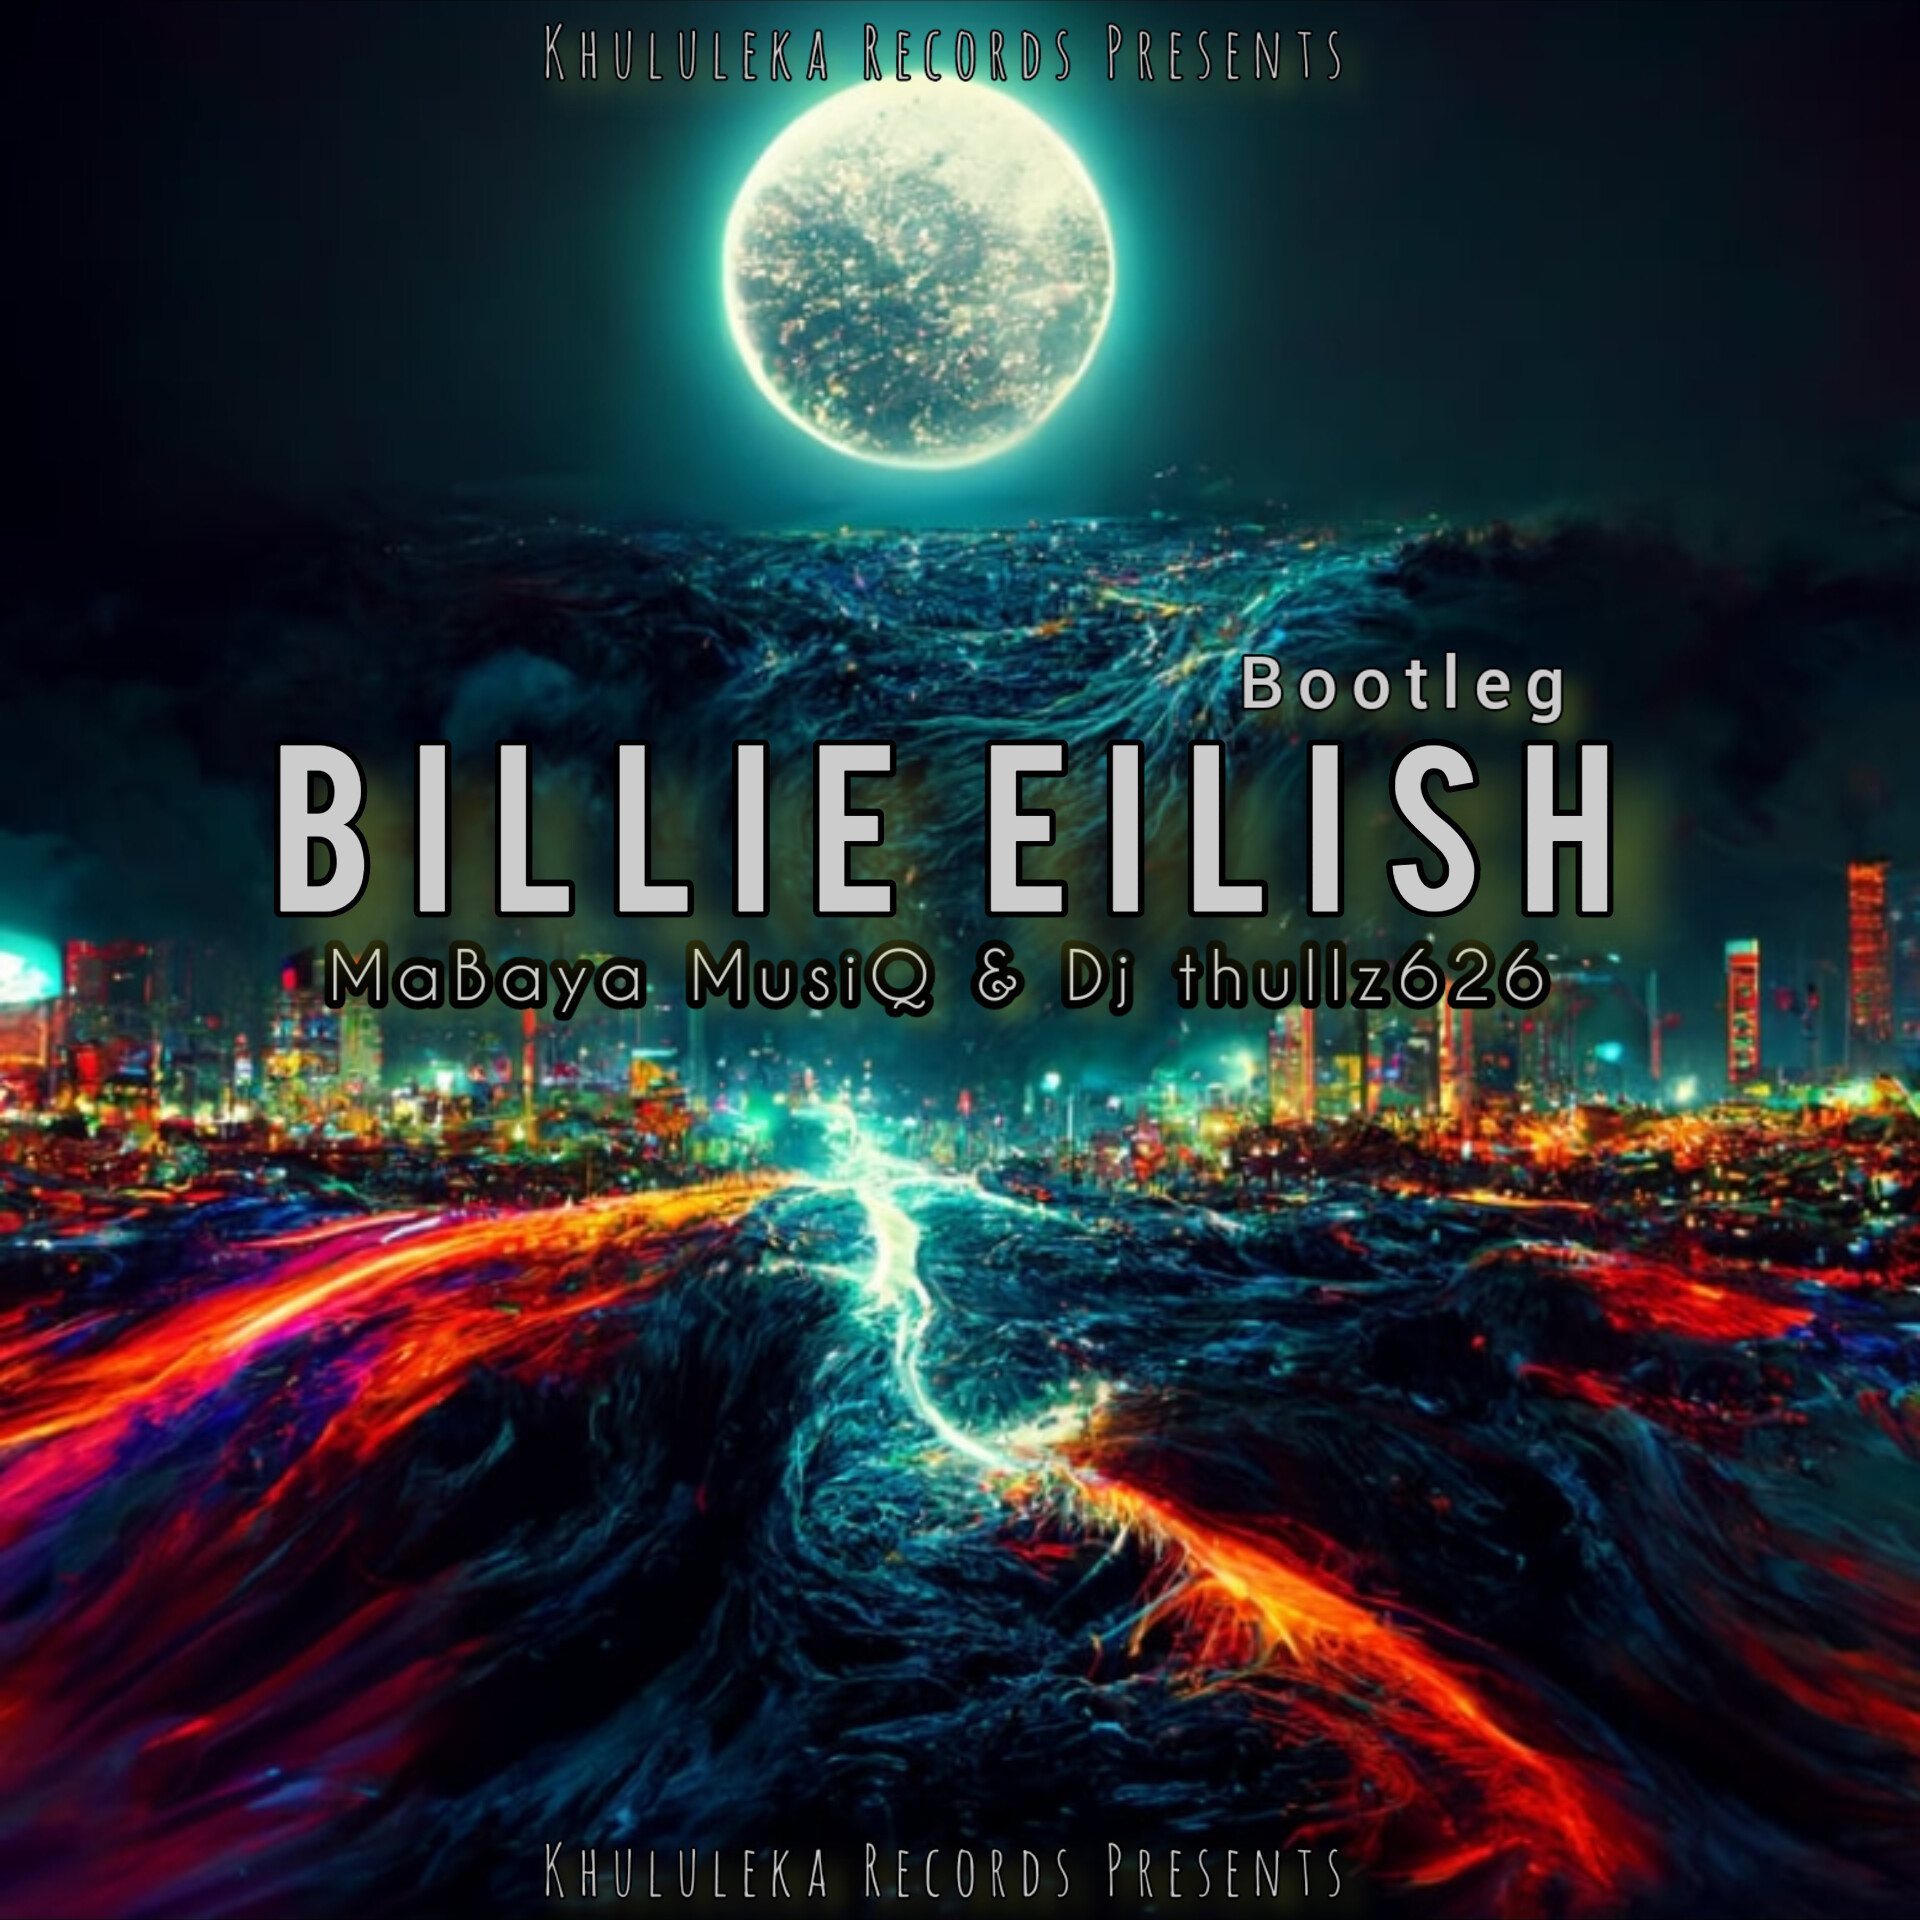 Billie Eilish (Bootleg) - MaBaya MusiQ & Dj thullz626